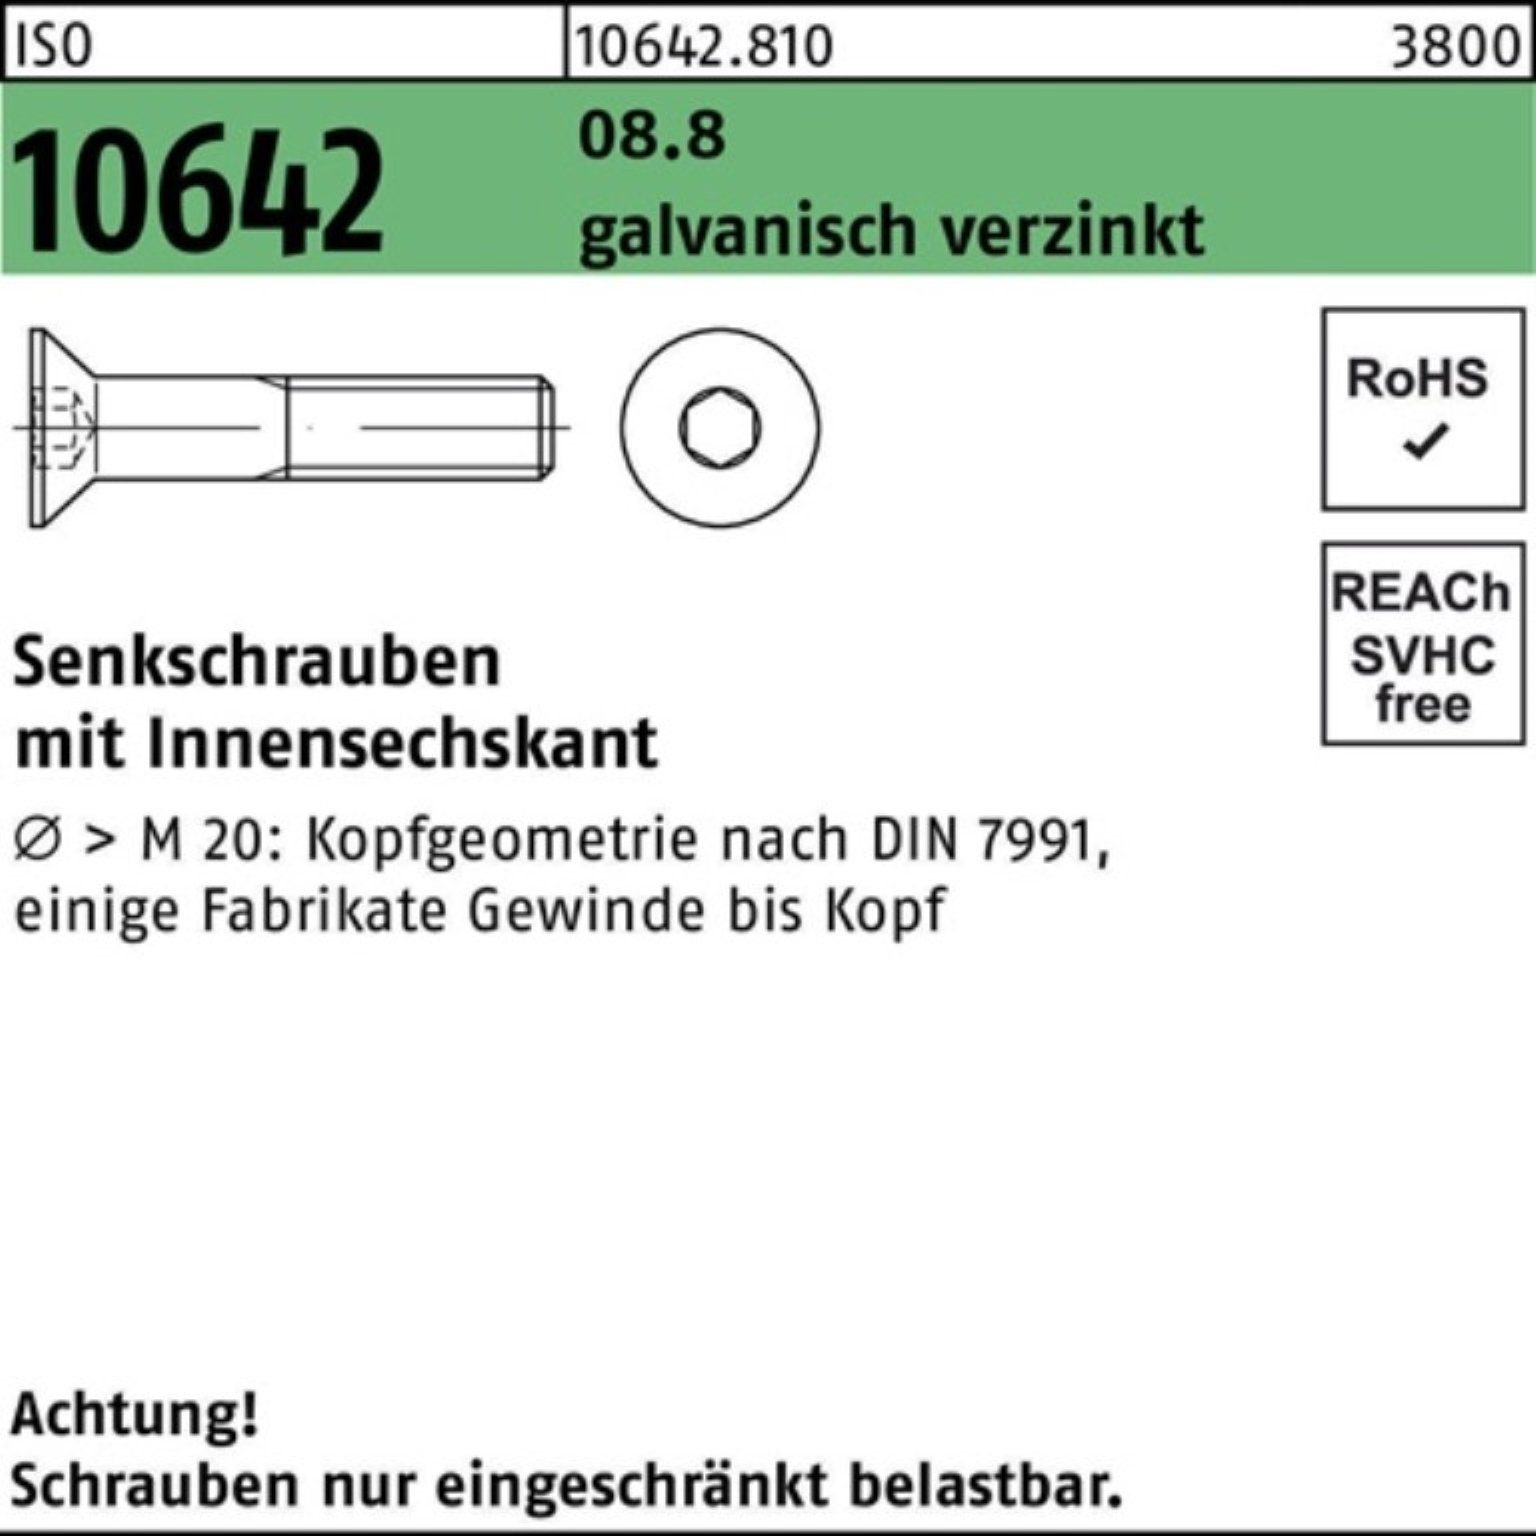 Reyher Senkschraube 14 ISO galv.verz. Innen-6kt Senkschraube M4x 8.8 Pack 500er 500 10642